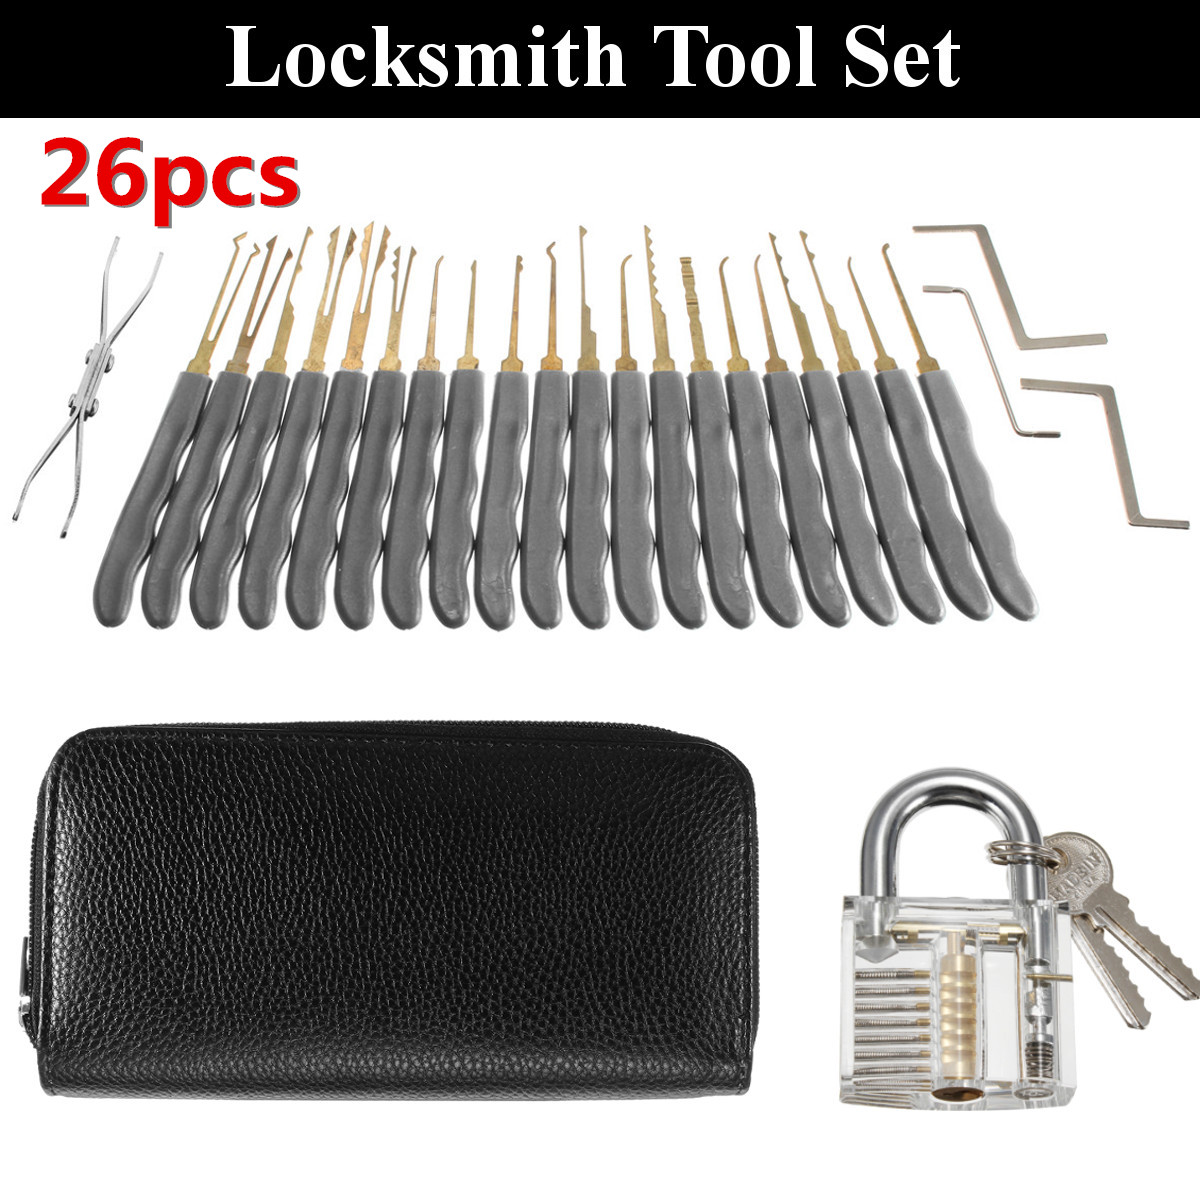 26Pcs-Padlock-Locksmith-Training-Starter-Practice-Kit-Lock-Unlocking-Pick-Tool-1202650